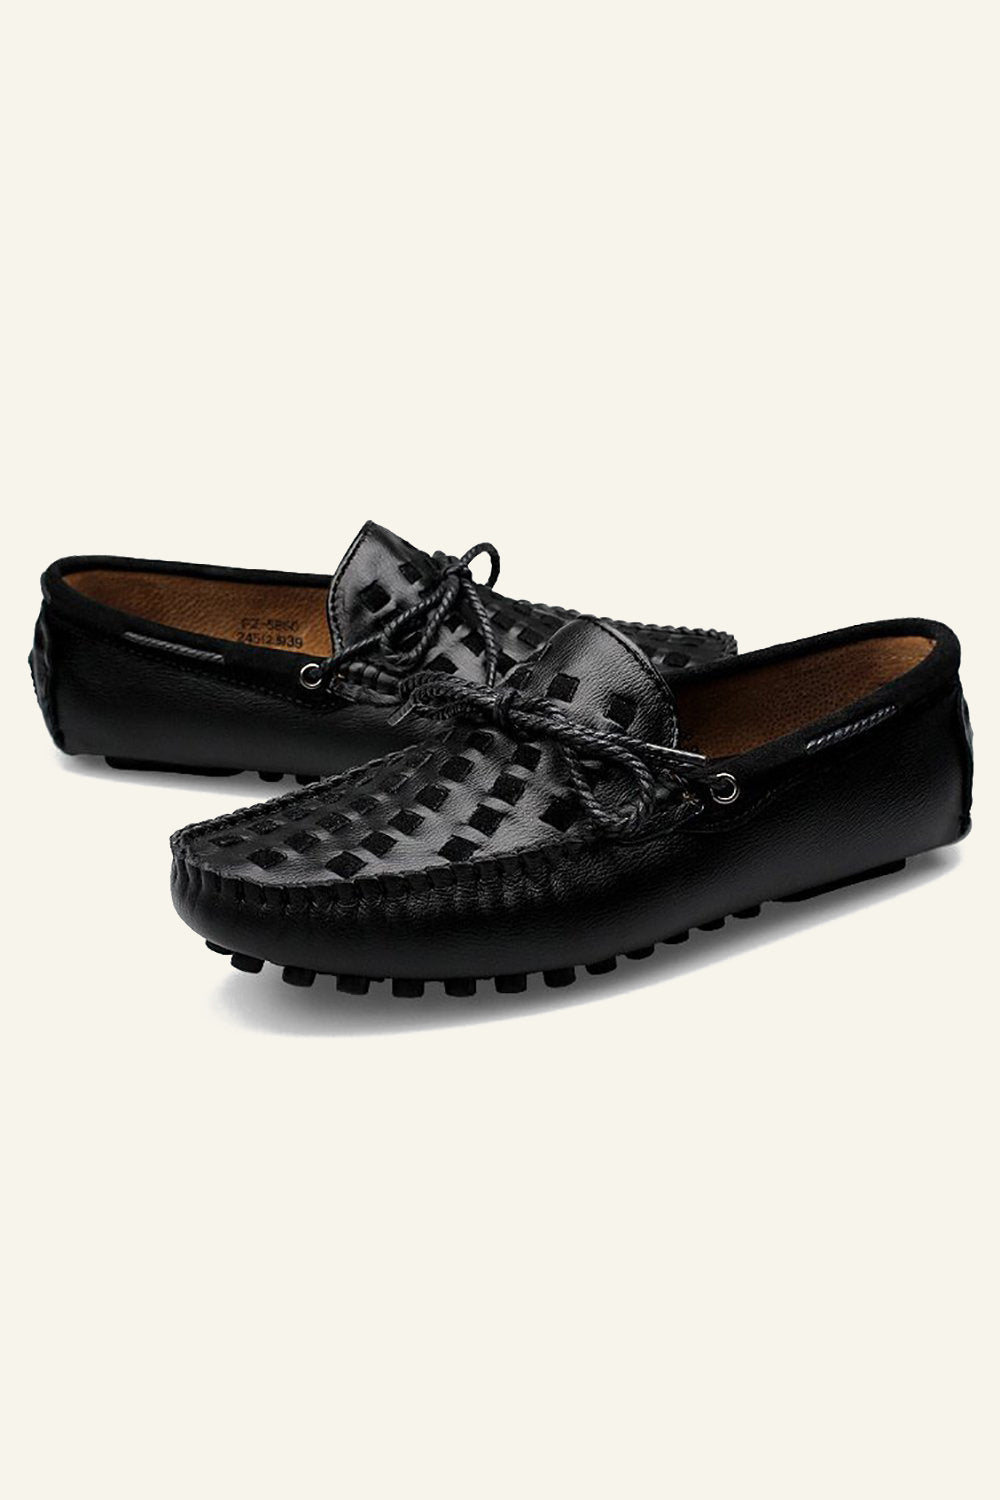 Black Slip-on Men's Casual Shoes